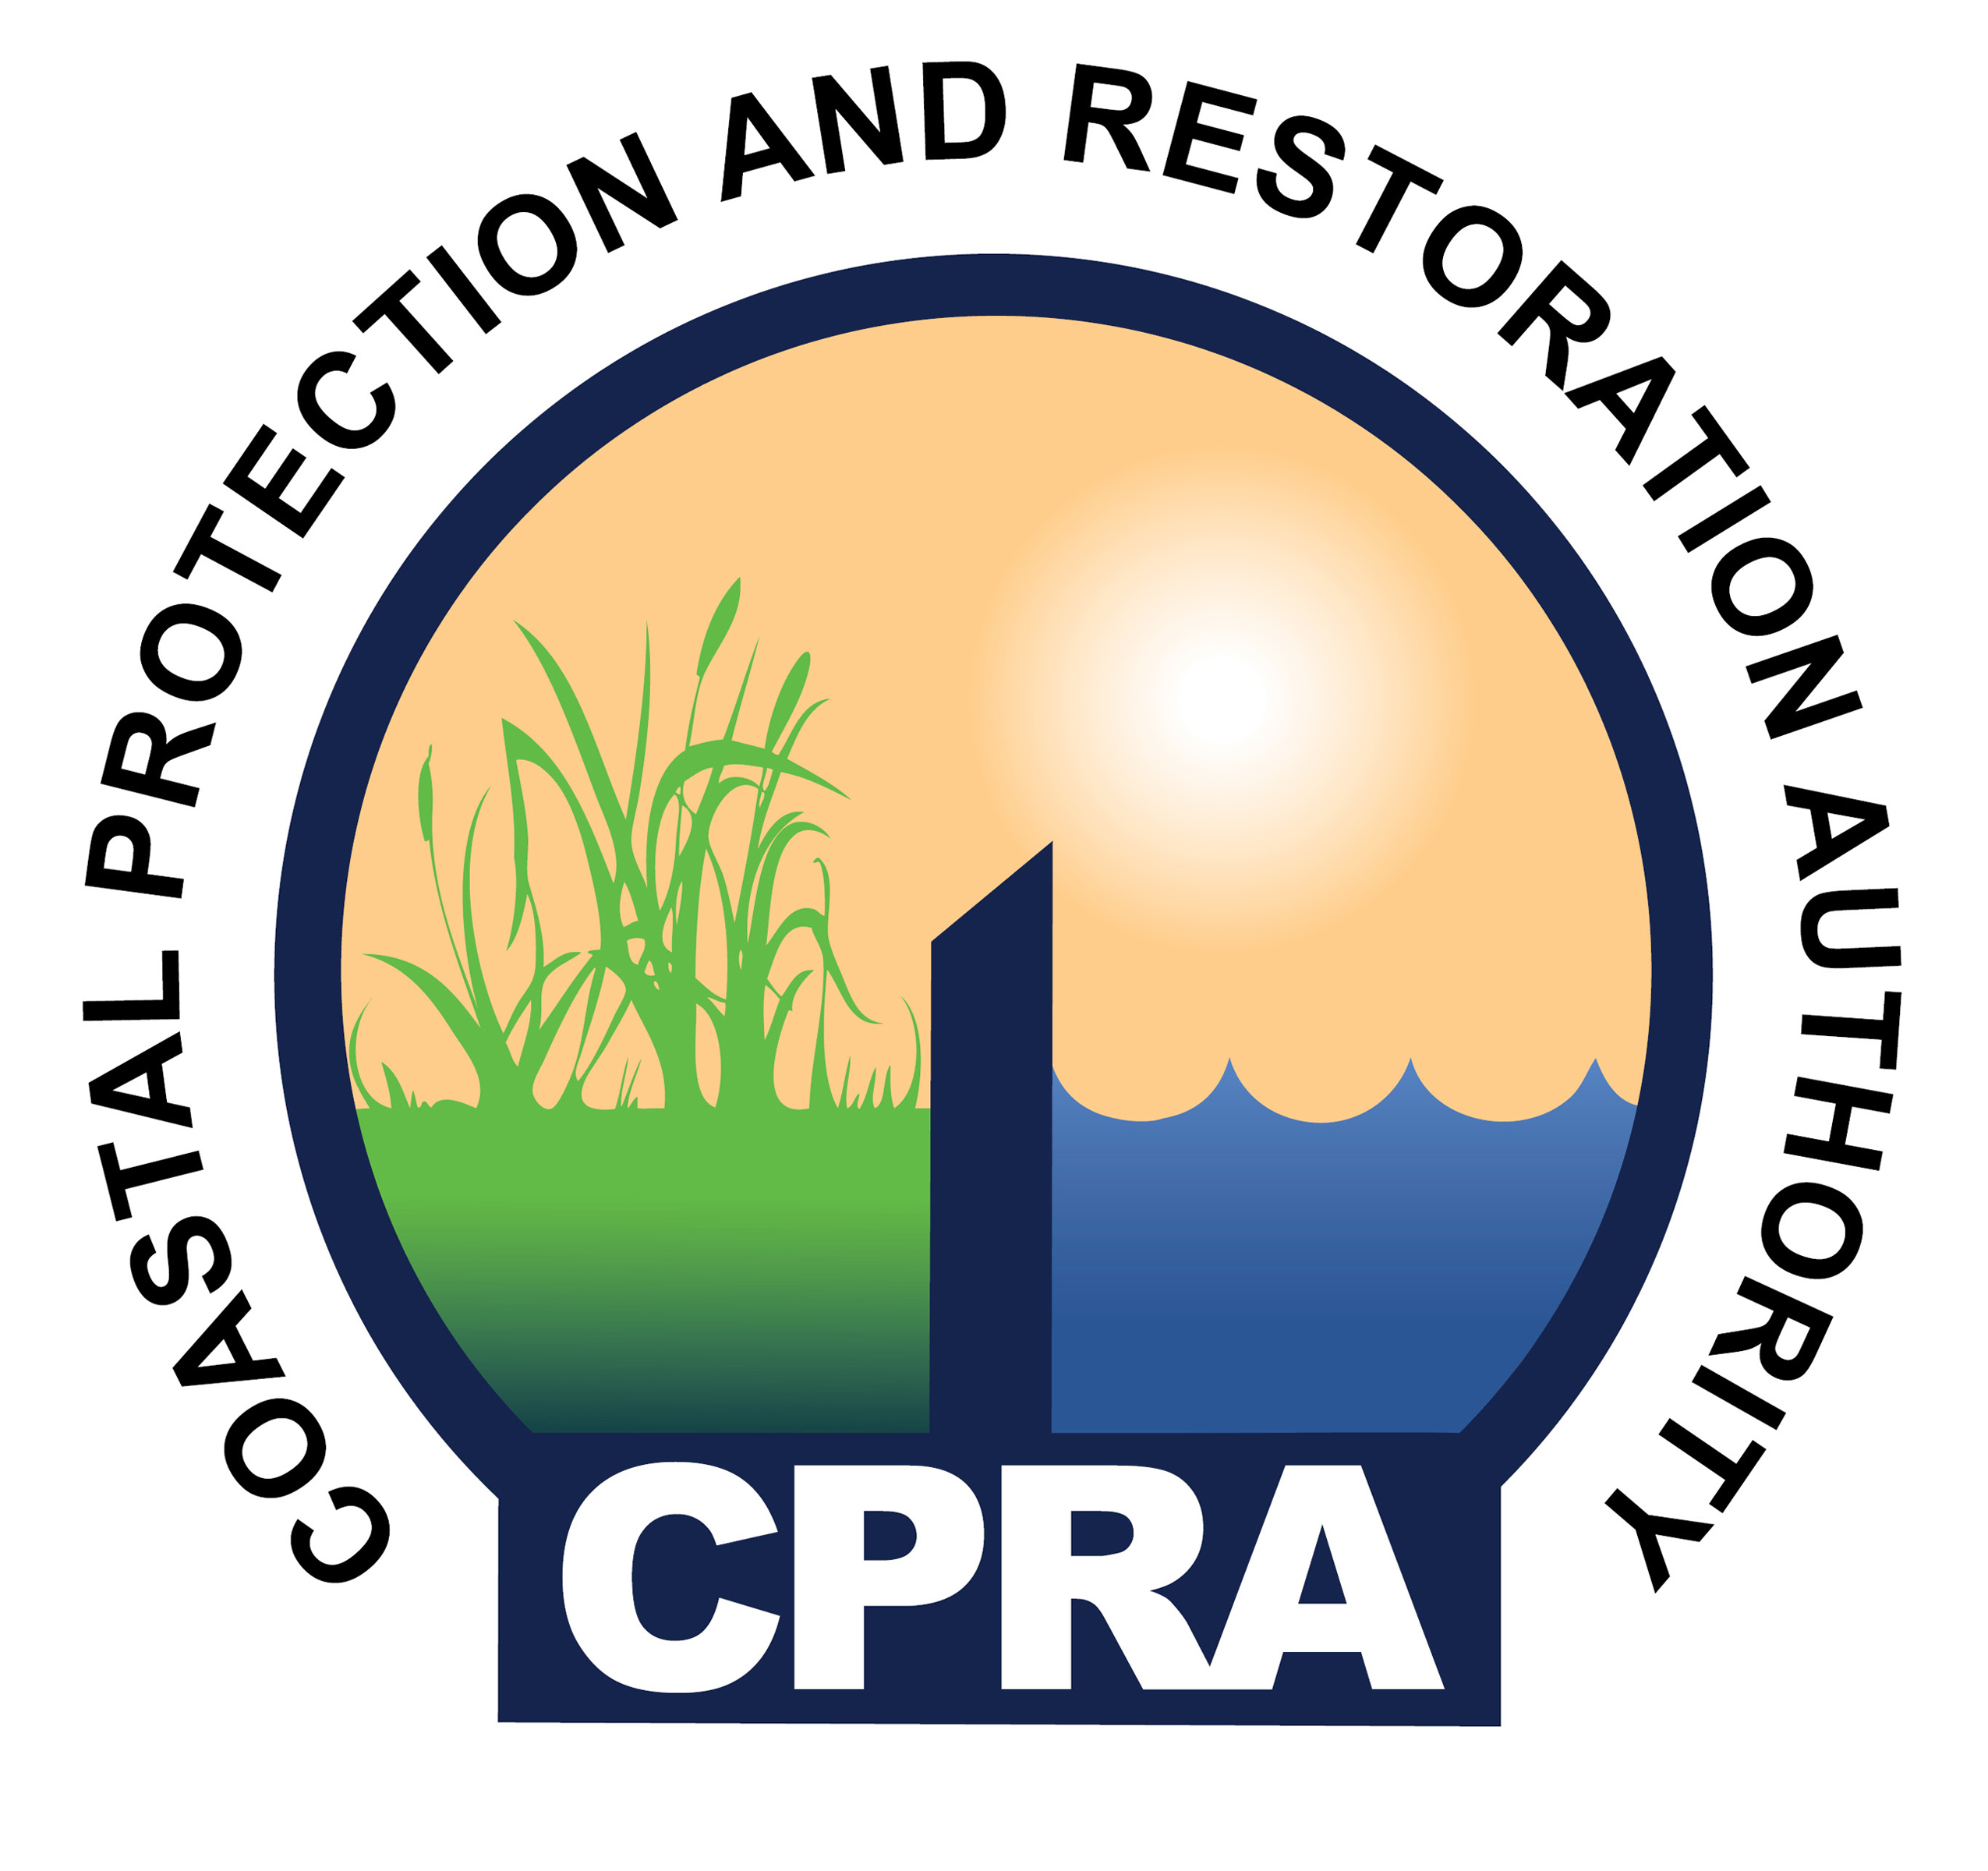 Coastal Protection And Restoration Authority 2019 Flood Fight